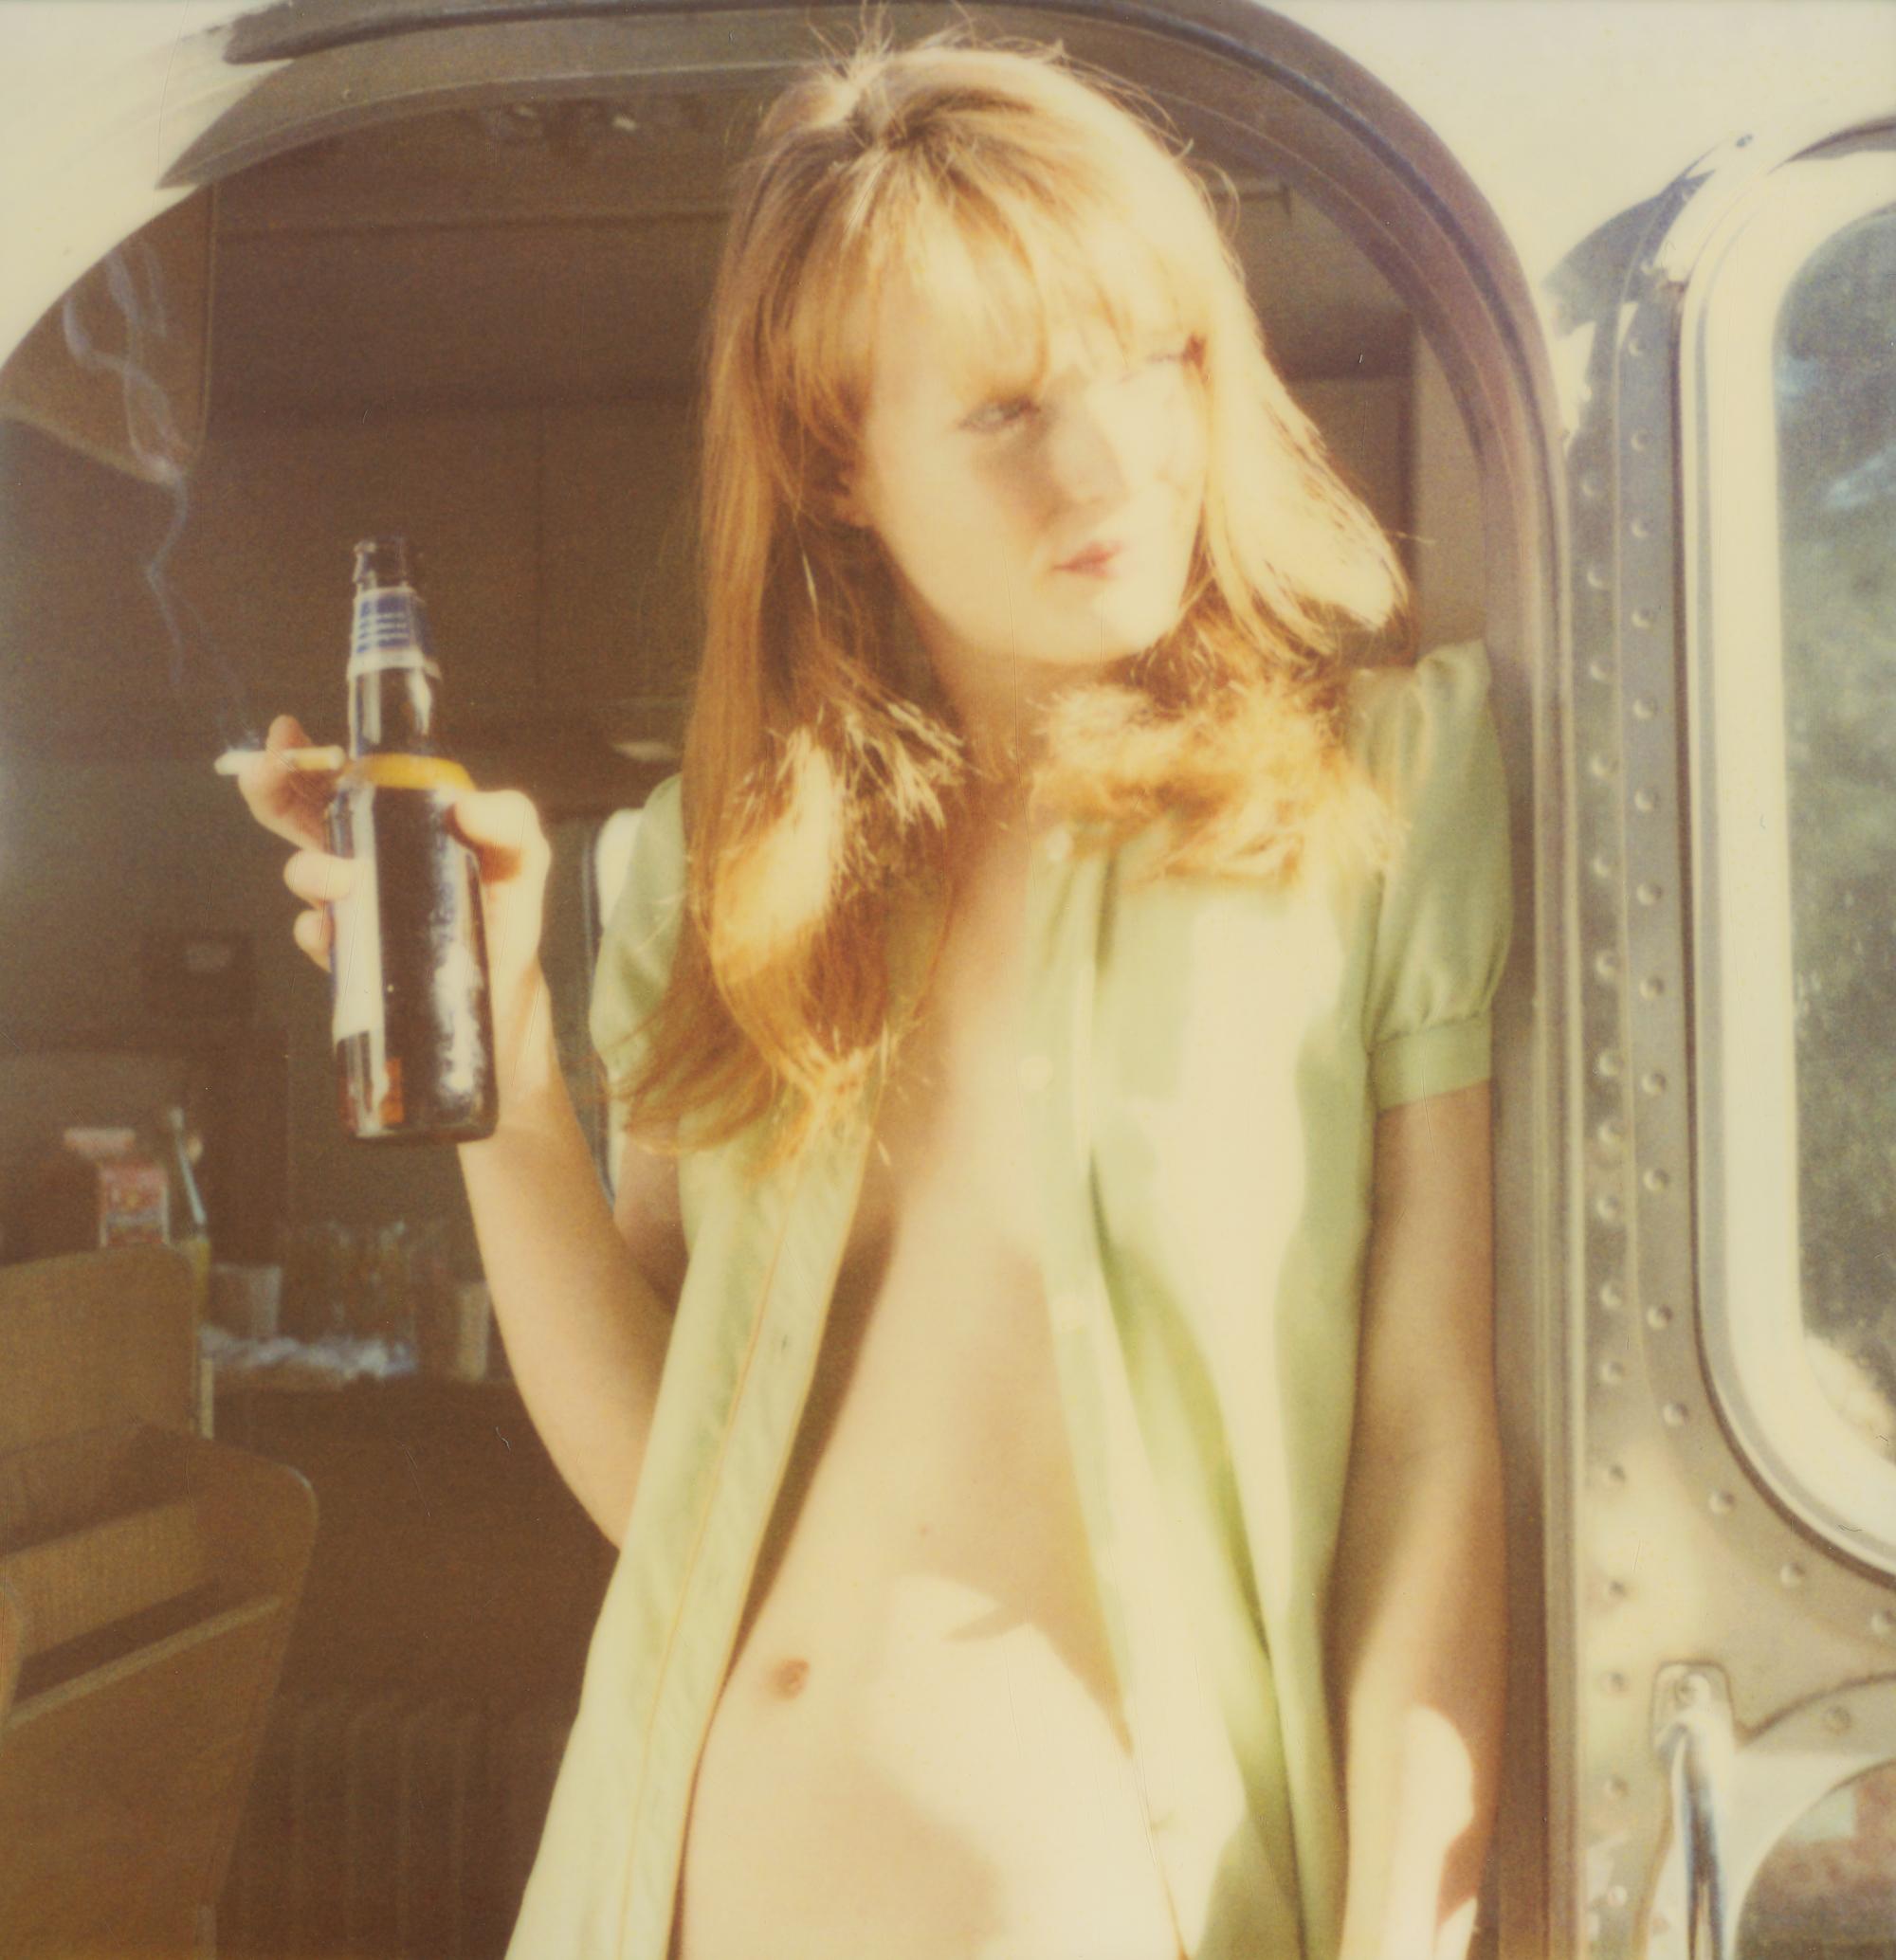 Stefanie Schneider Portrait Photograph - The morning after (Till Death do us Part) - Contemporary, Polaroid, Women